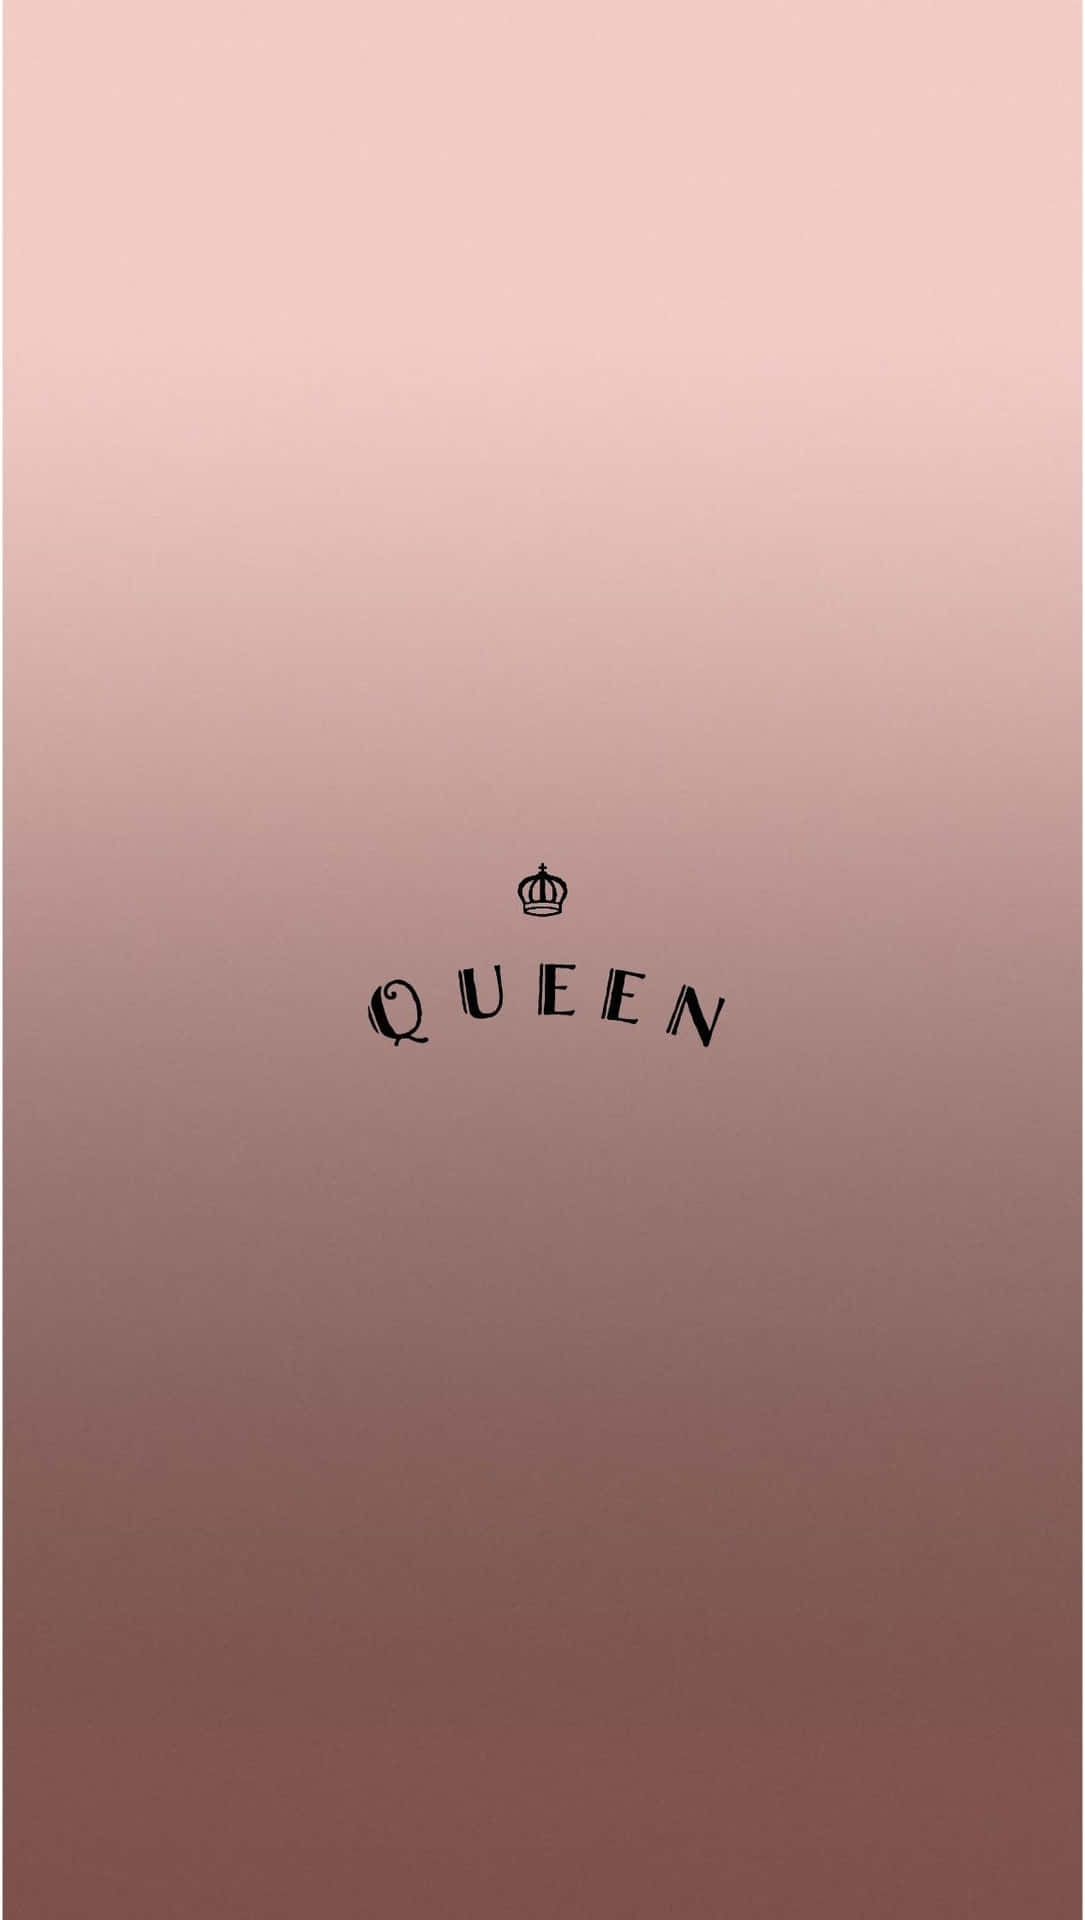 Rose Gold Queen Aesthetic.jpg Wallpaper